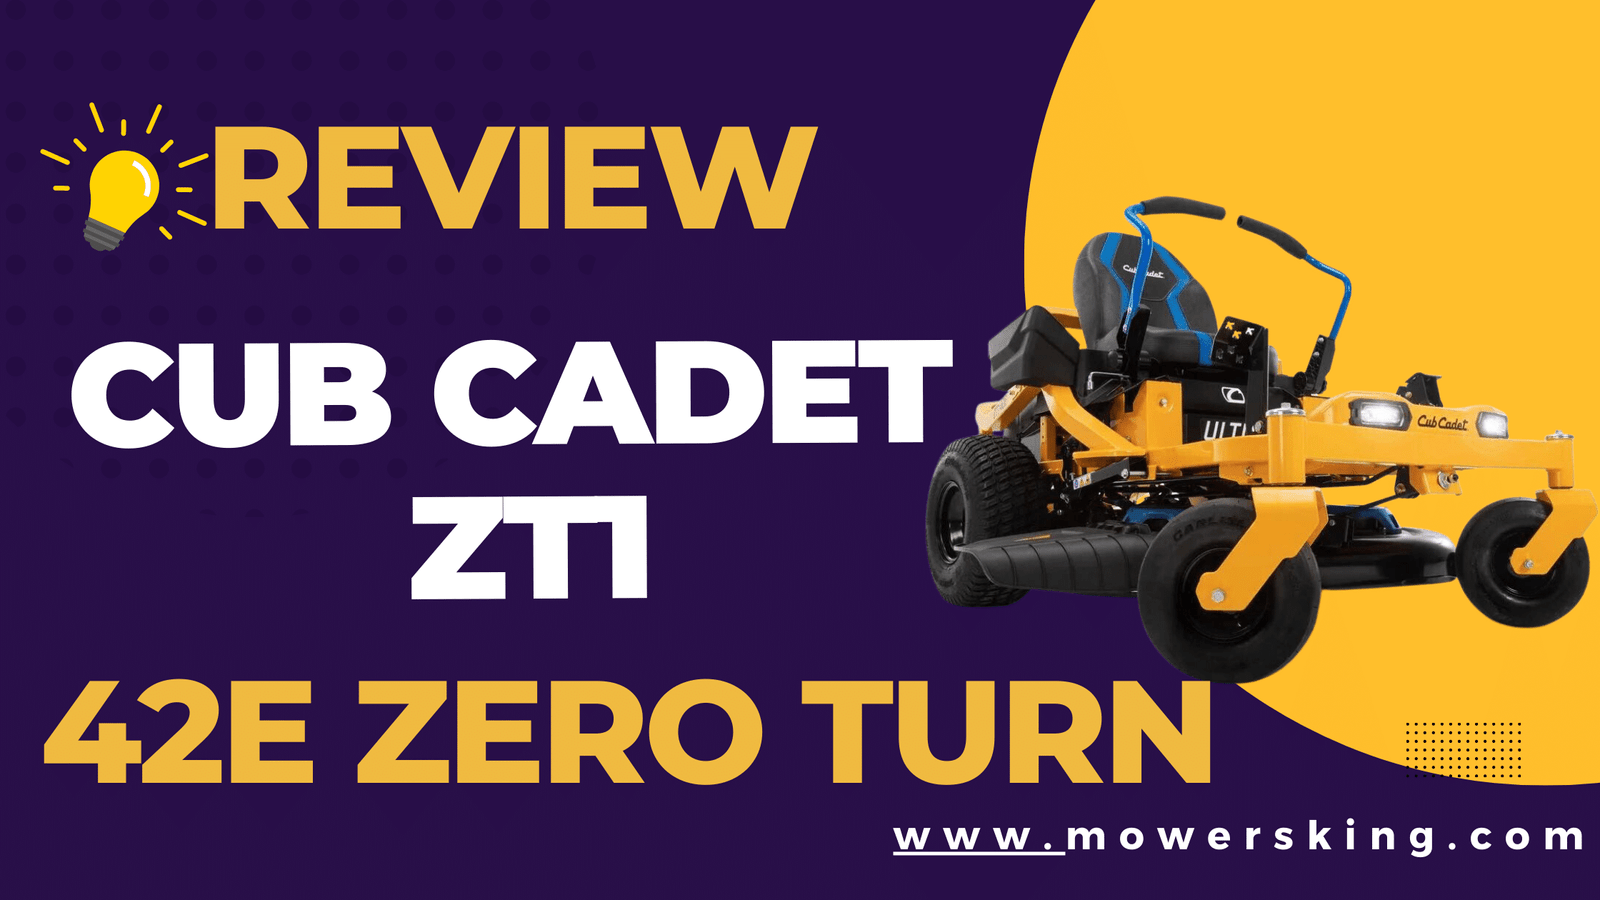 Cub Cadet ZT1-42E Zero Turn Review